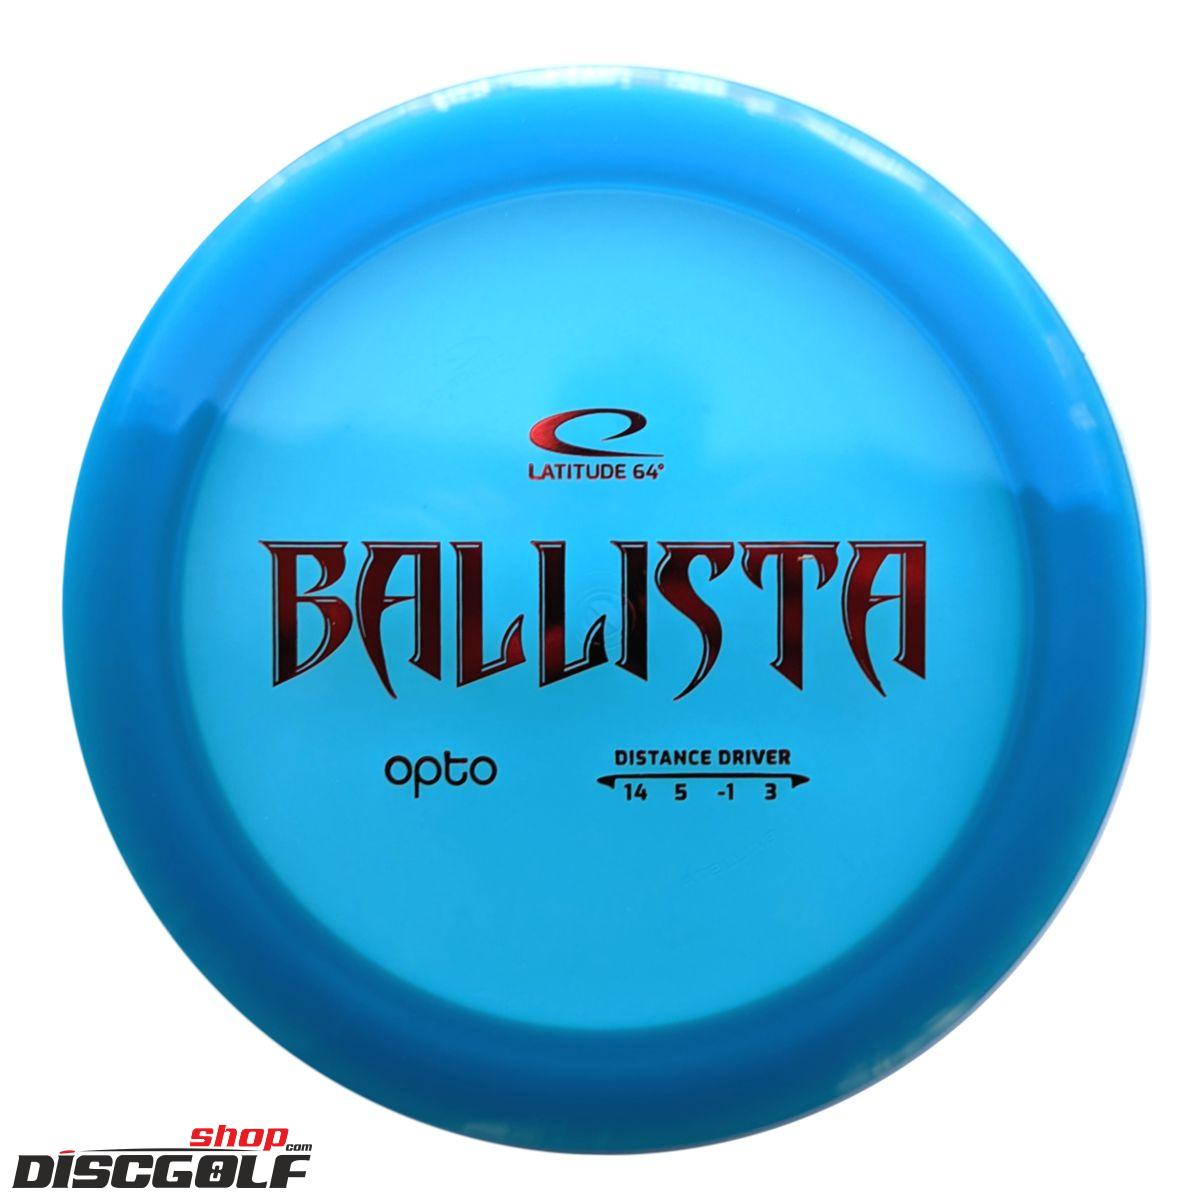 Latitude 64º Ballista Opto (discgolf)